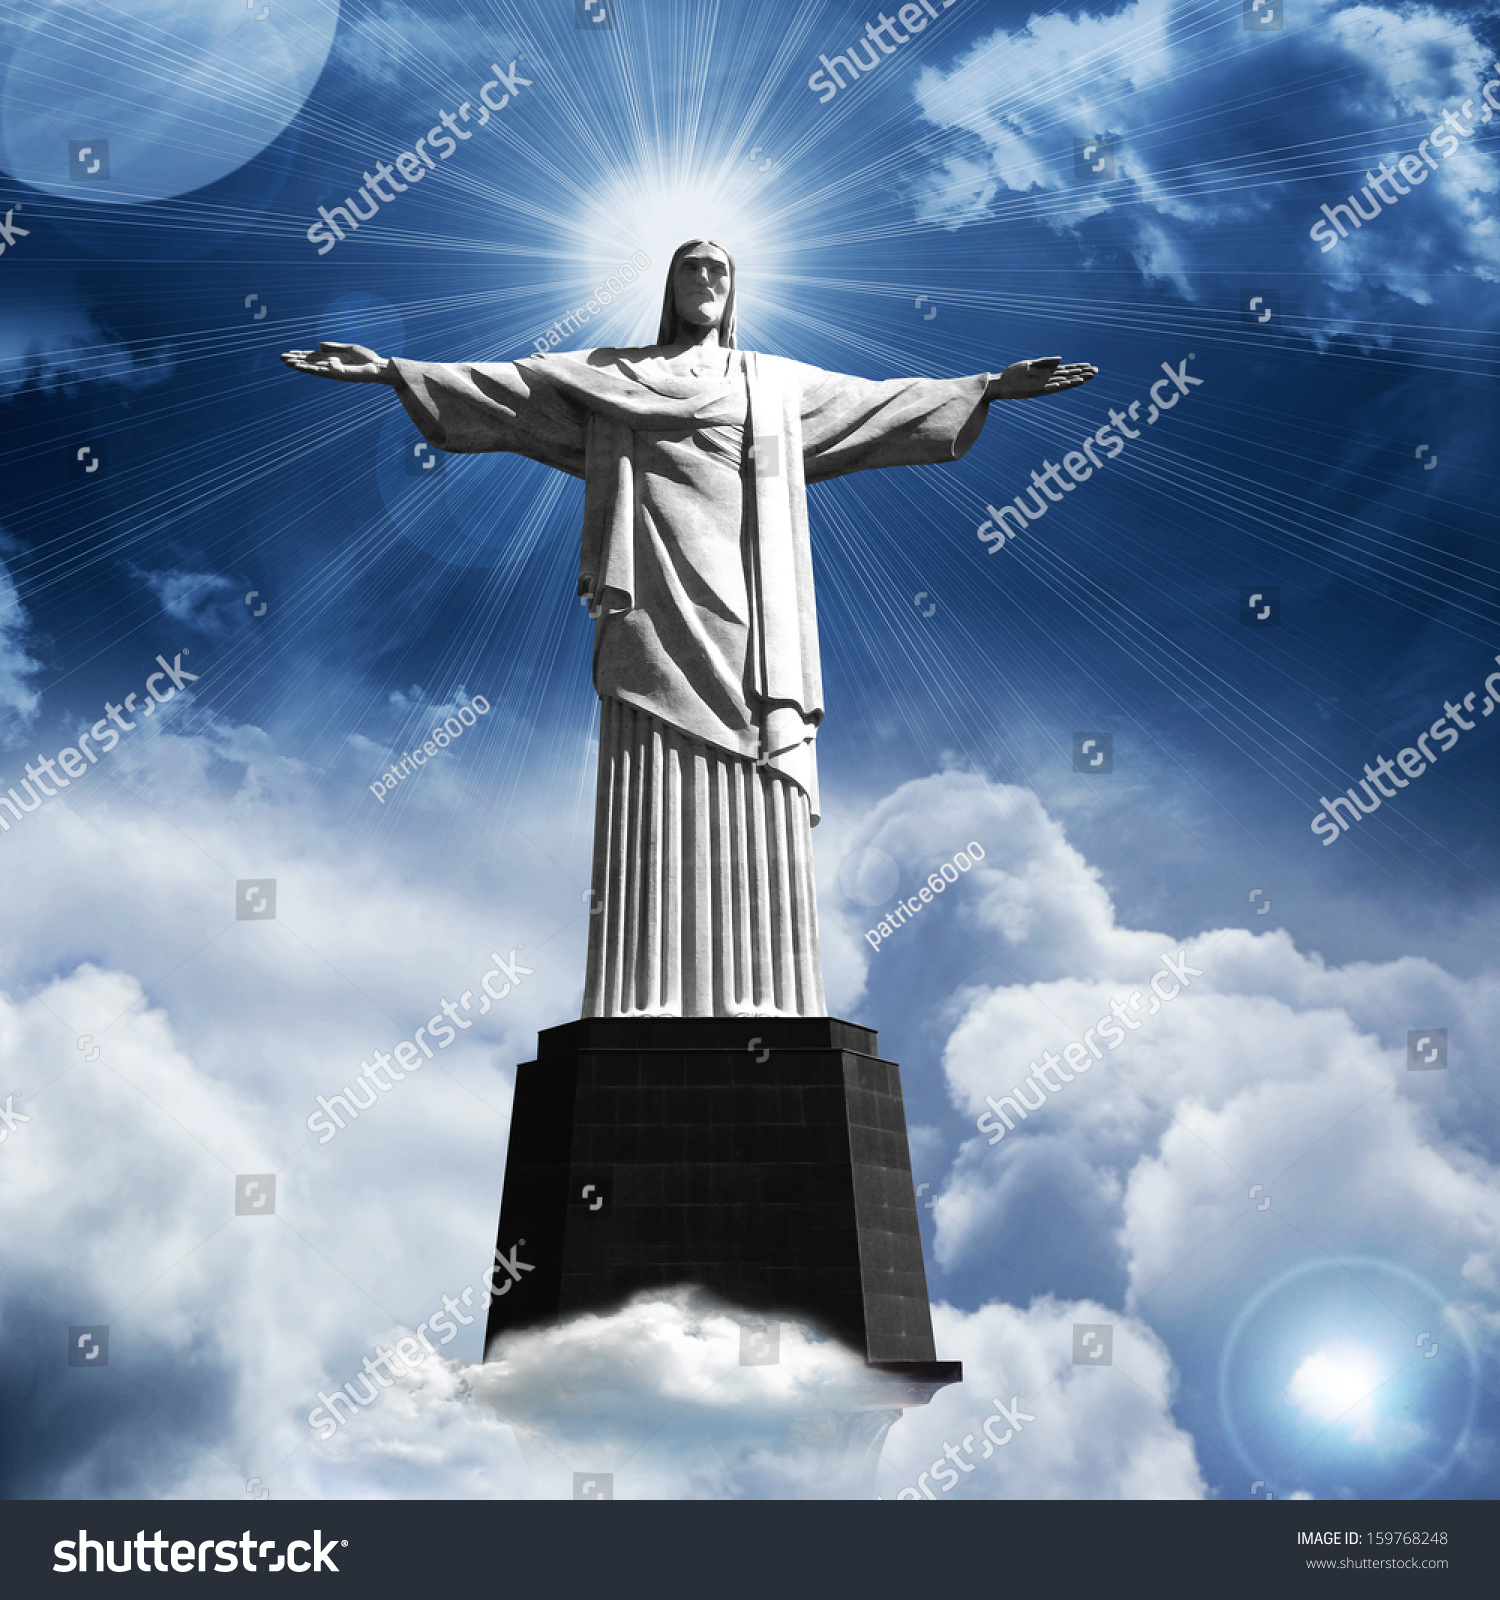 Jesus Christ Statue Sky Clouds Background Stock Photo 159768248